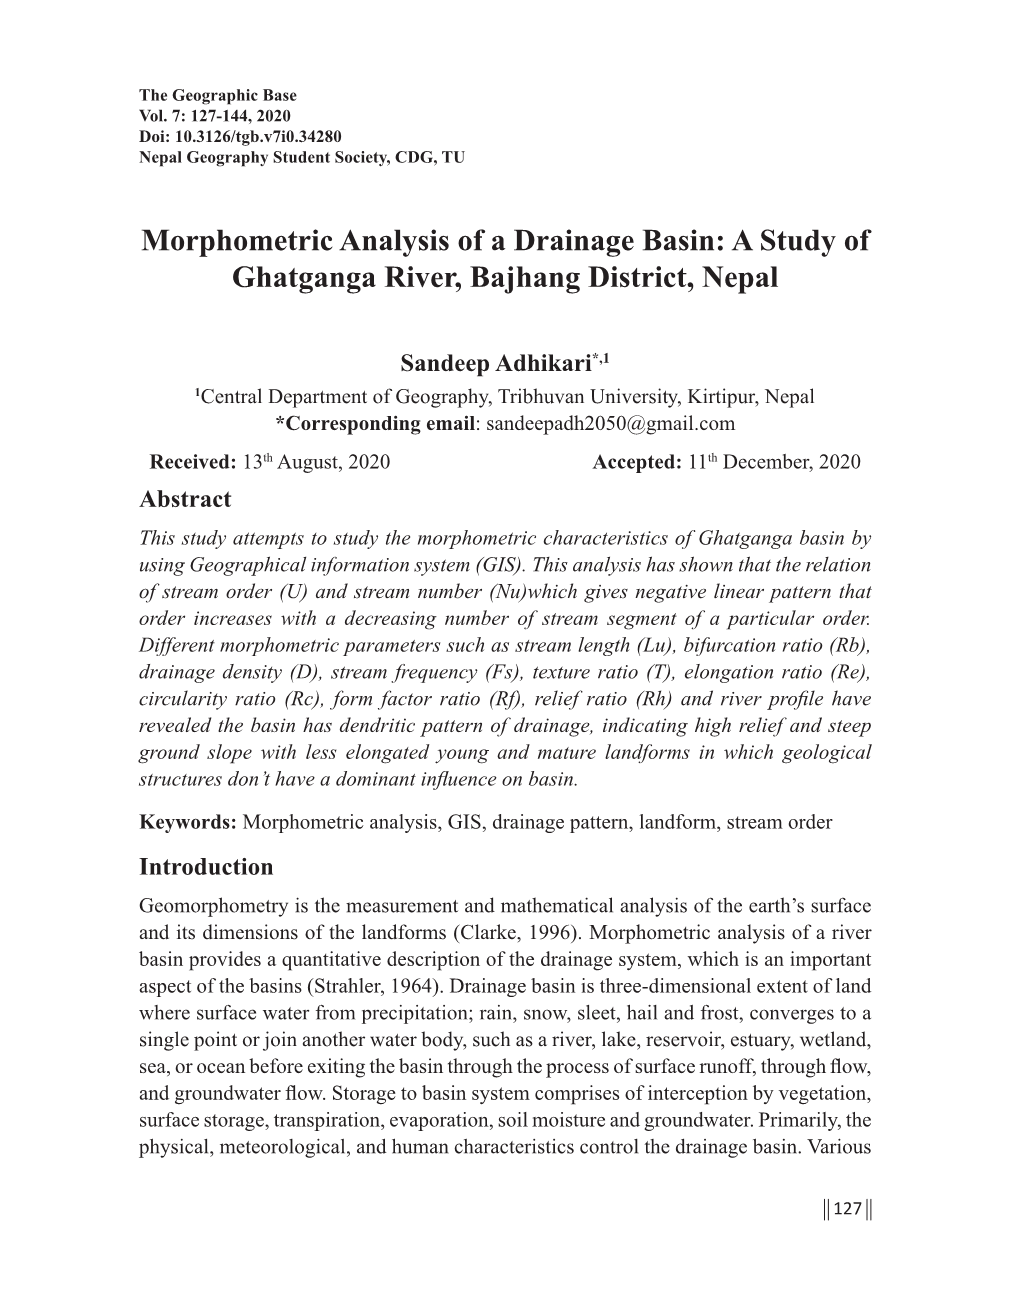 Morphometric Analysis of a Drainage Basin: a Study of Ghatganga River, Bajhang District, Nepal